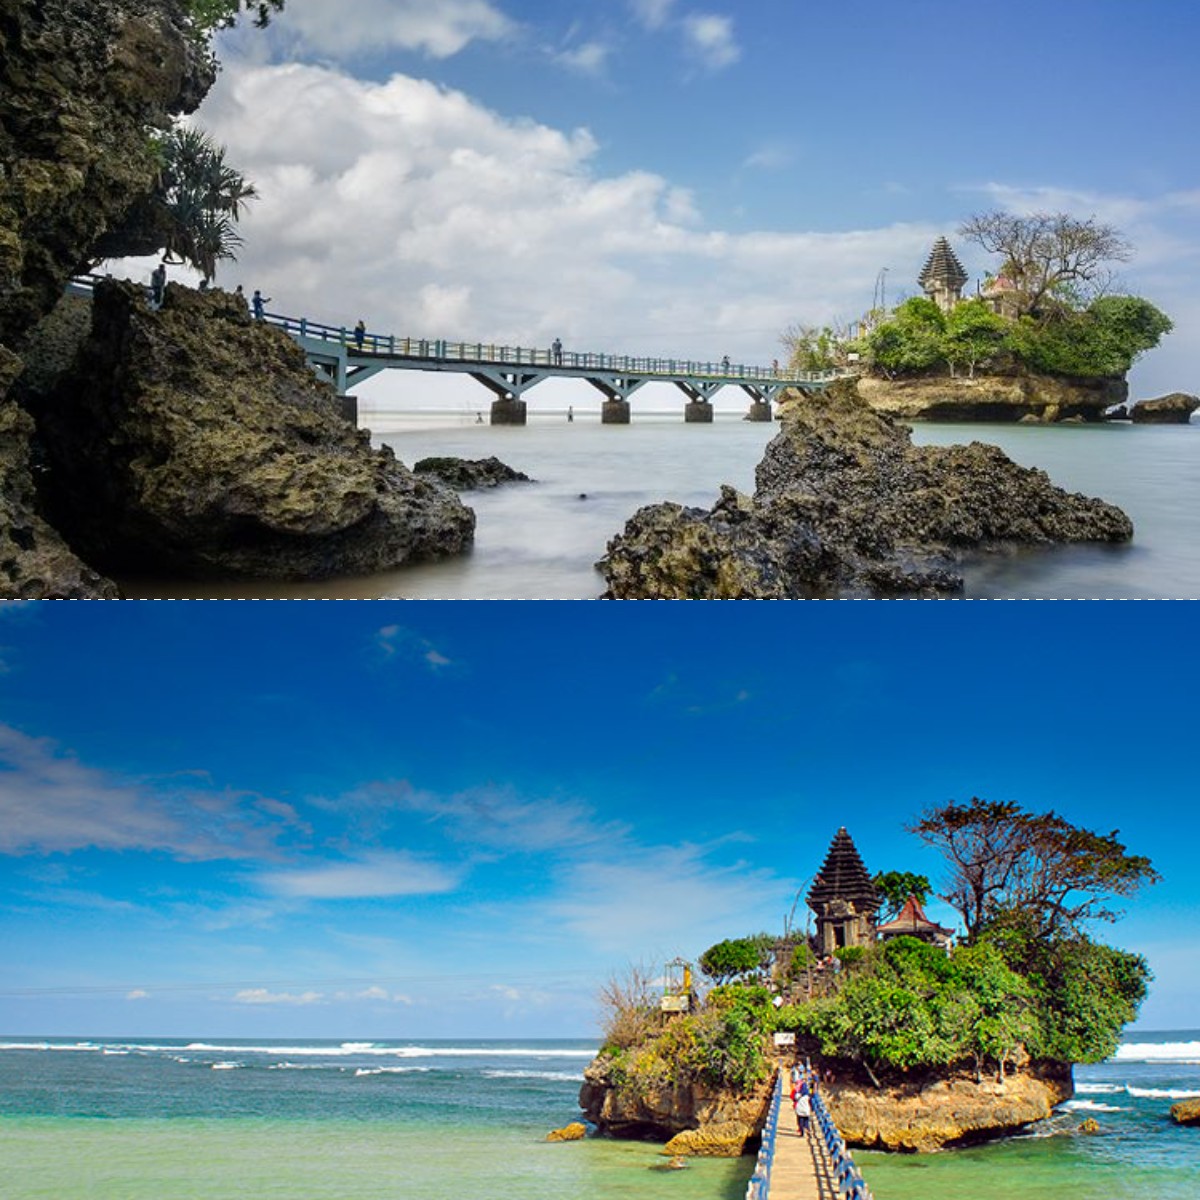 Keajaiban Alam Pantai di Malang, Surga Wisata Bahari Jawa Timur